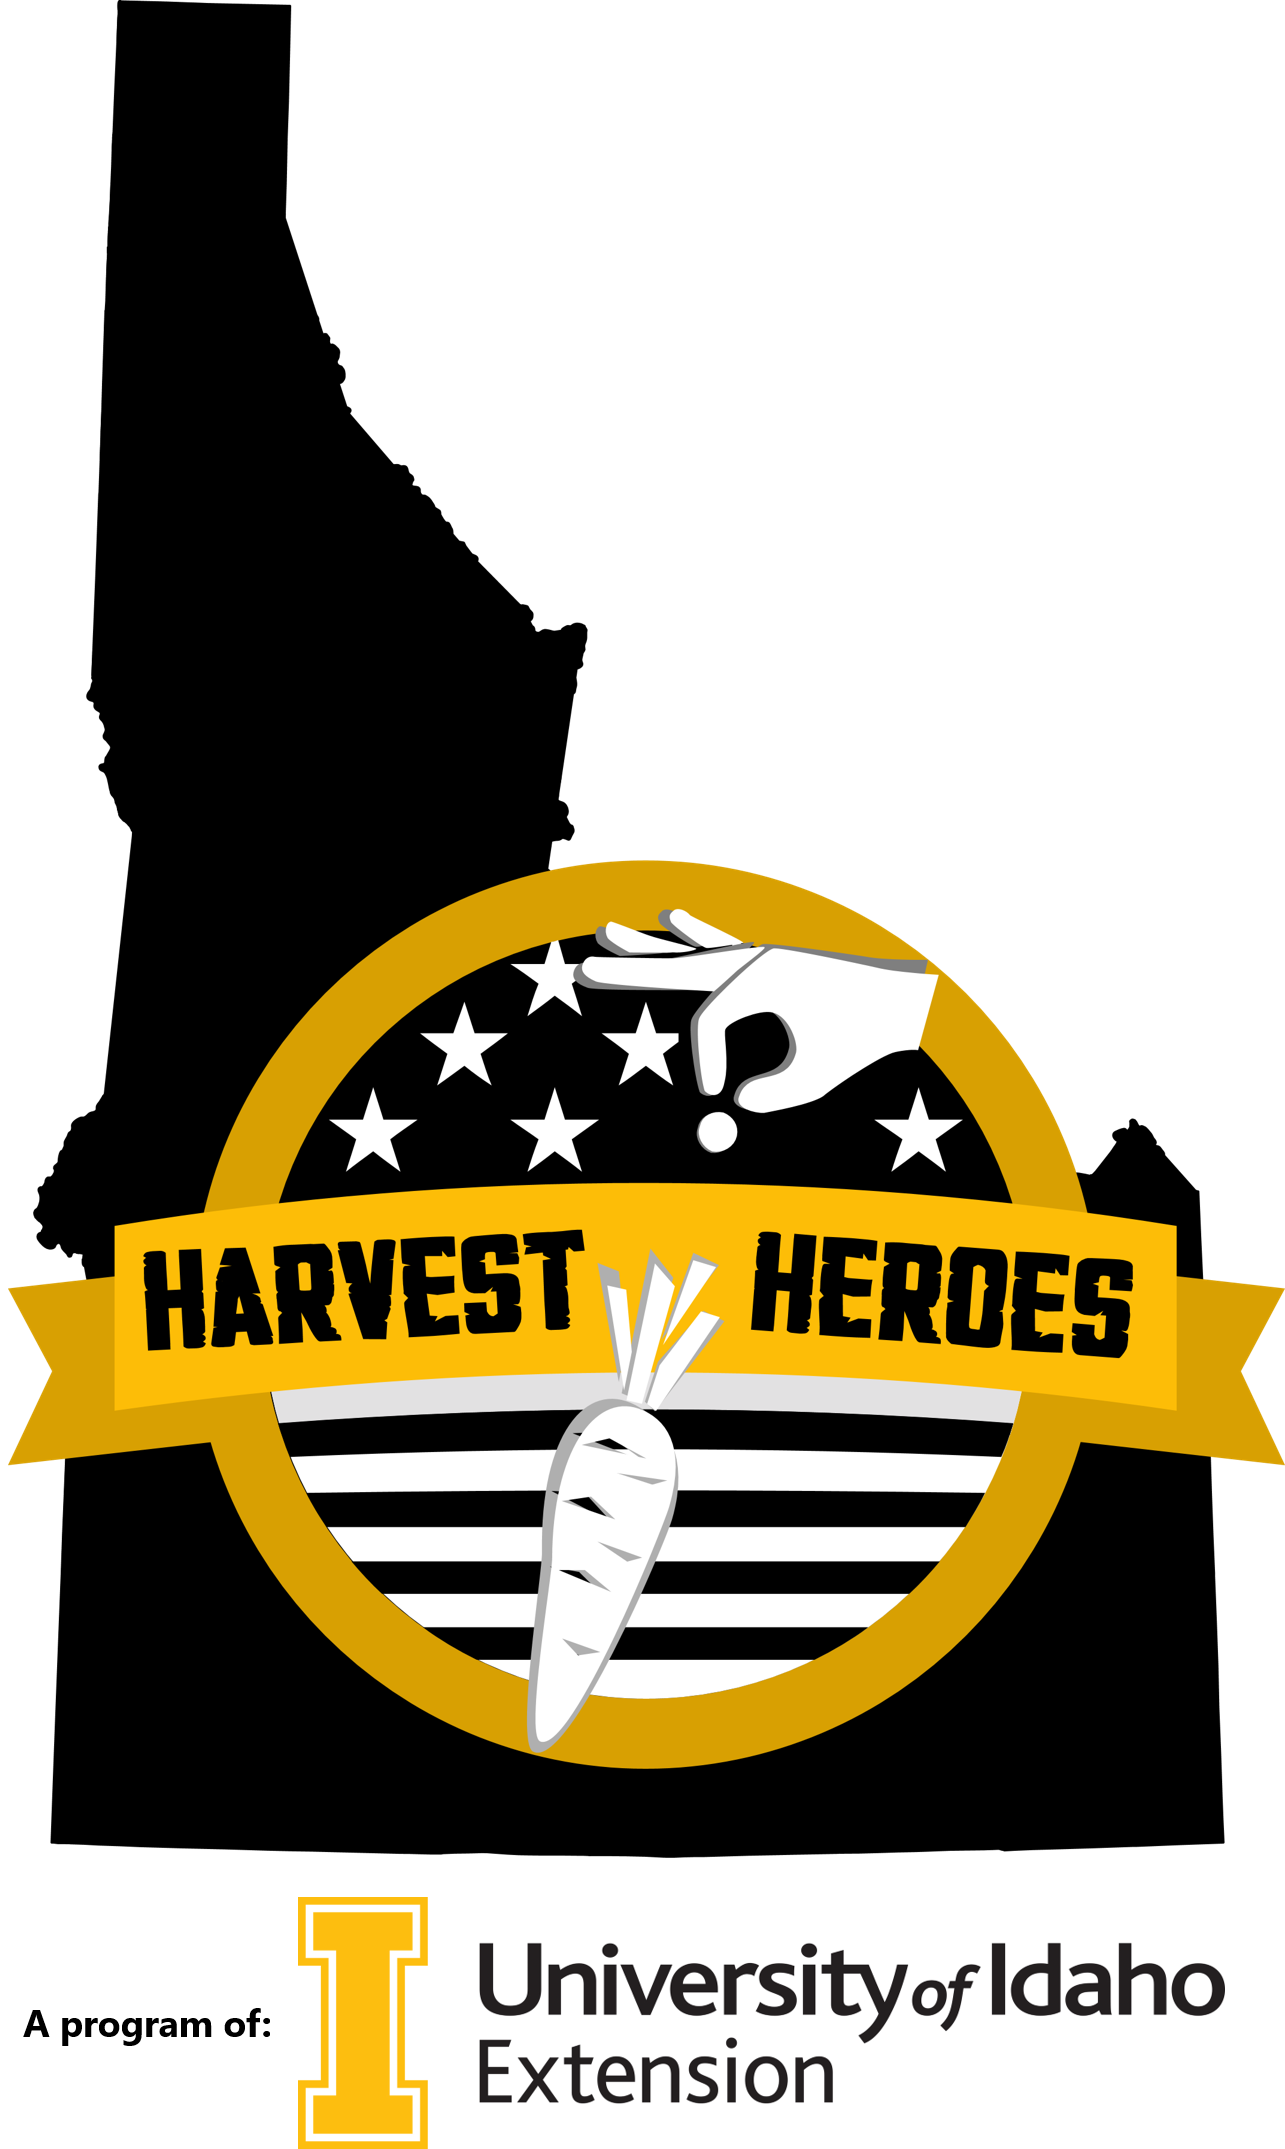 Harvest Heroes, a program of University of Idaho Extension